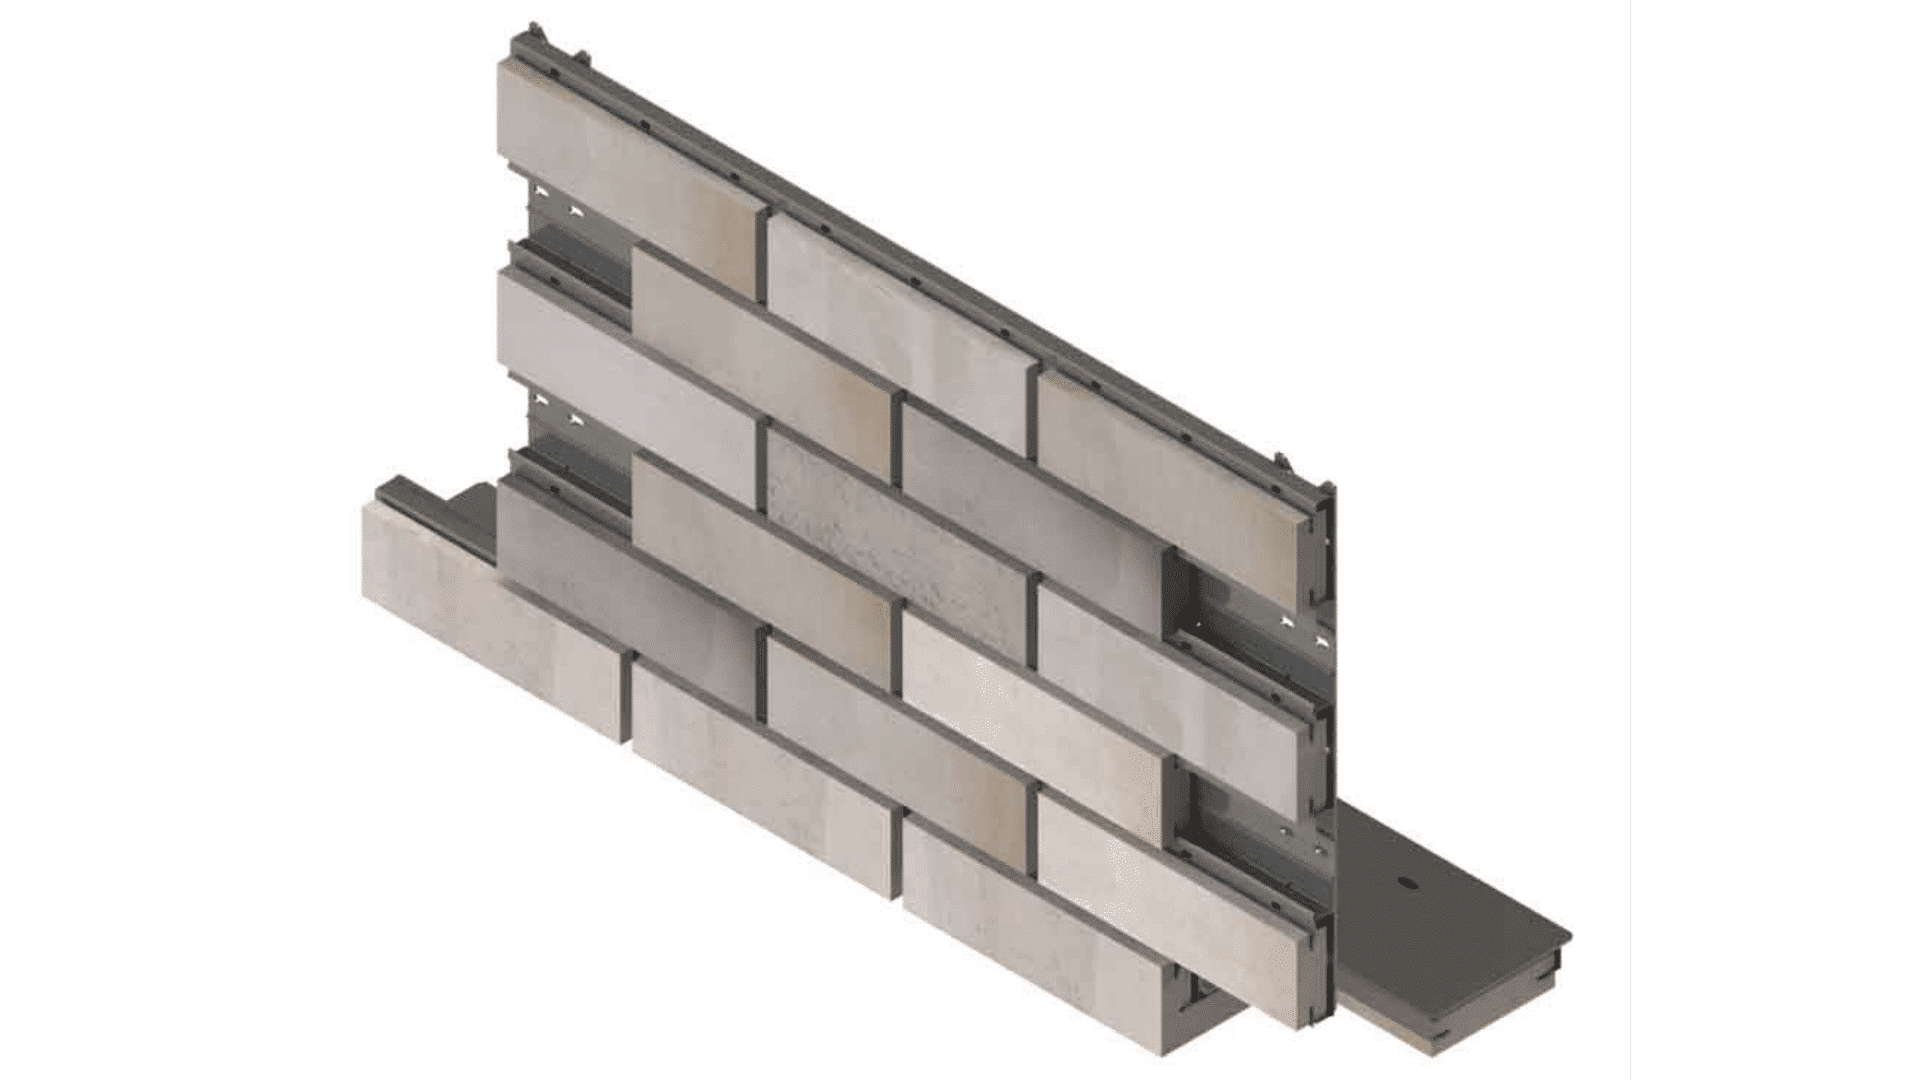 CERTUS - Modular Brick Façade System